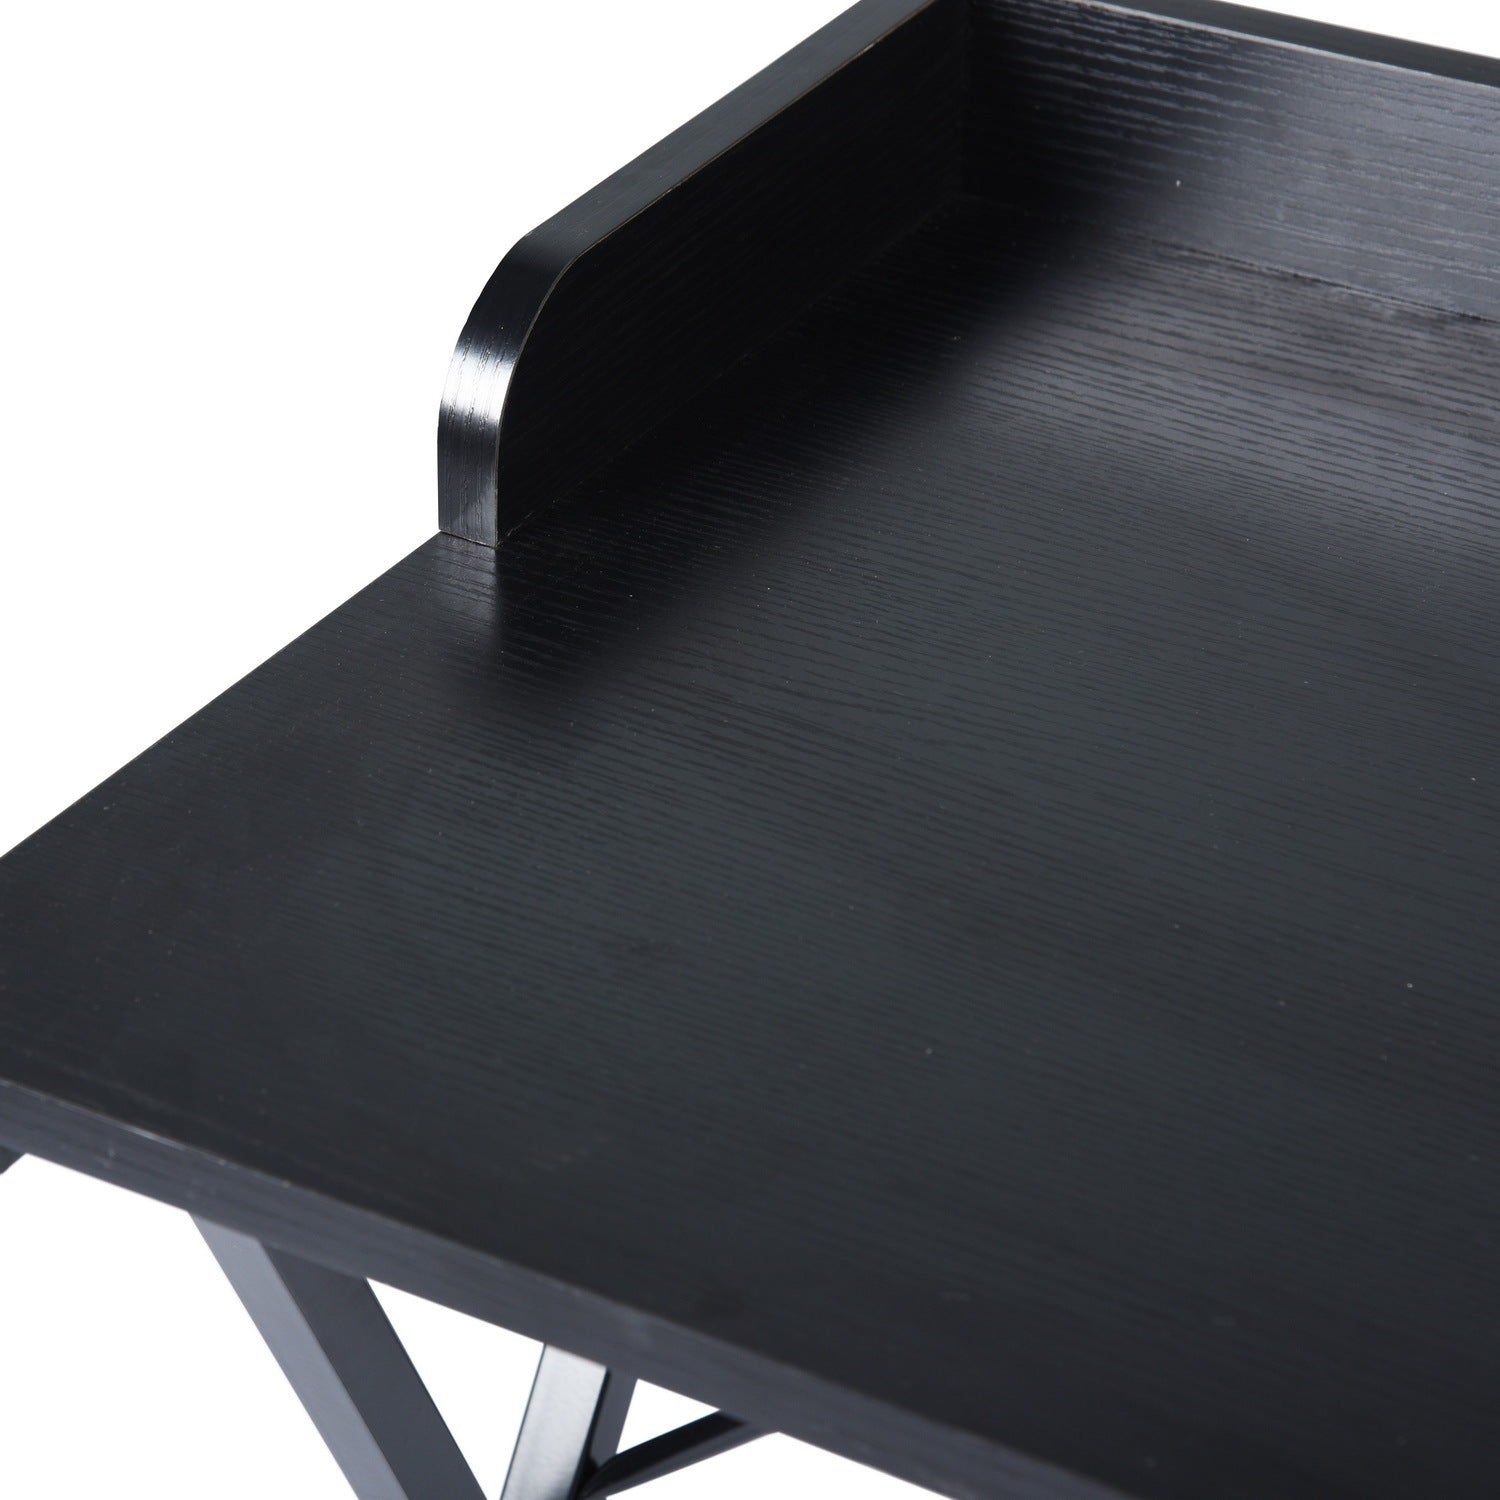 39.4"L Rectangular Computer Desk, Writing Desk full black-office-poplar-rectangular-mdf-metal & wood